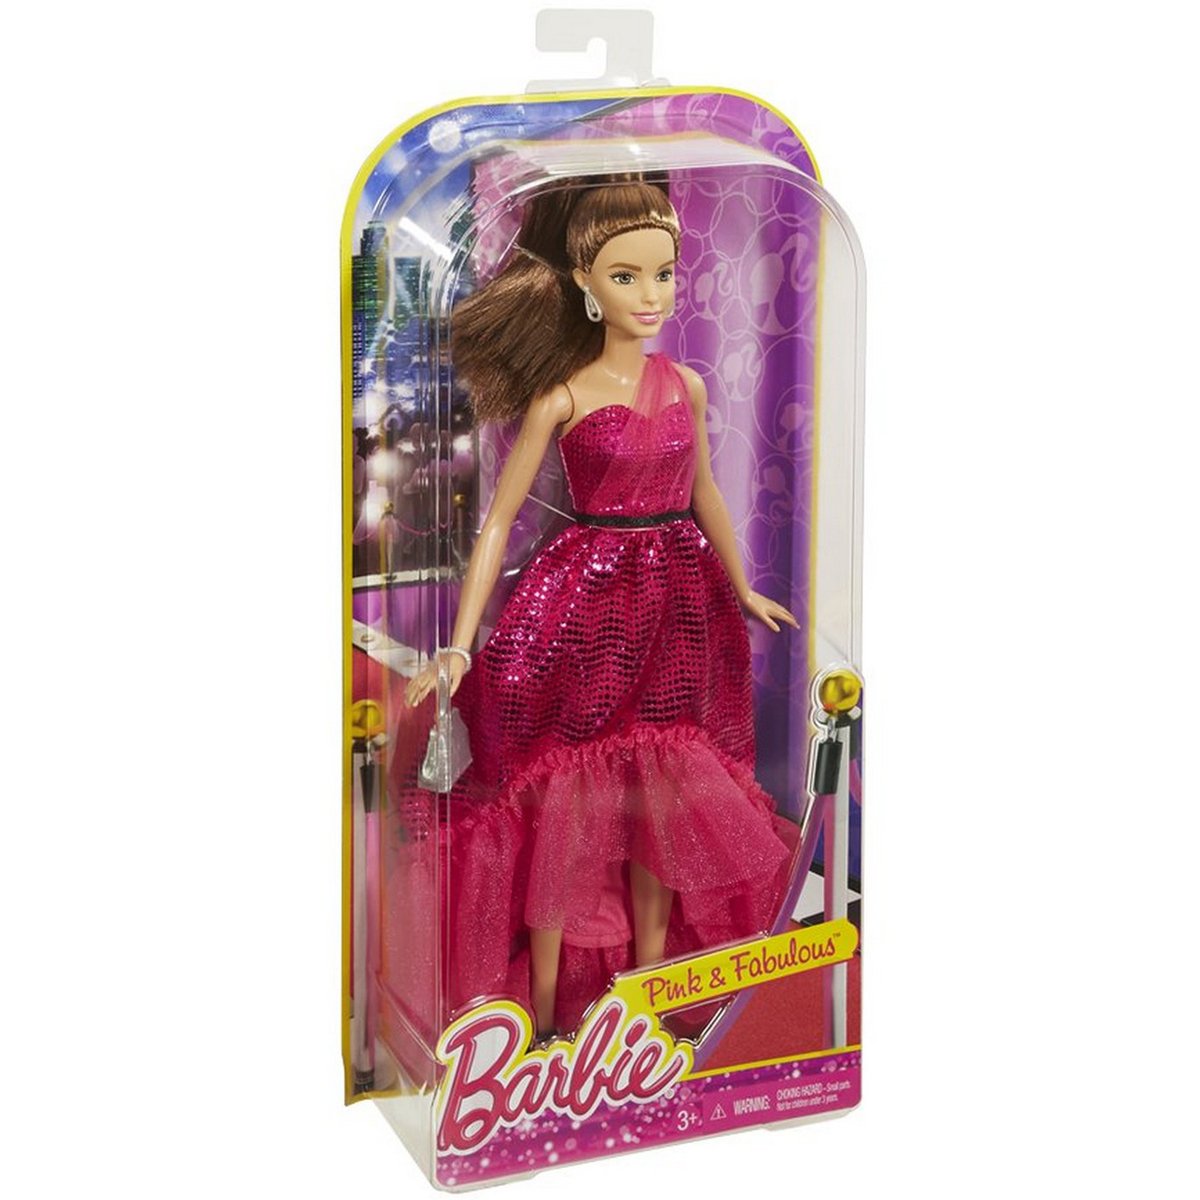 Barbie Pink & Fabulous Doll DGY69